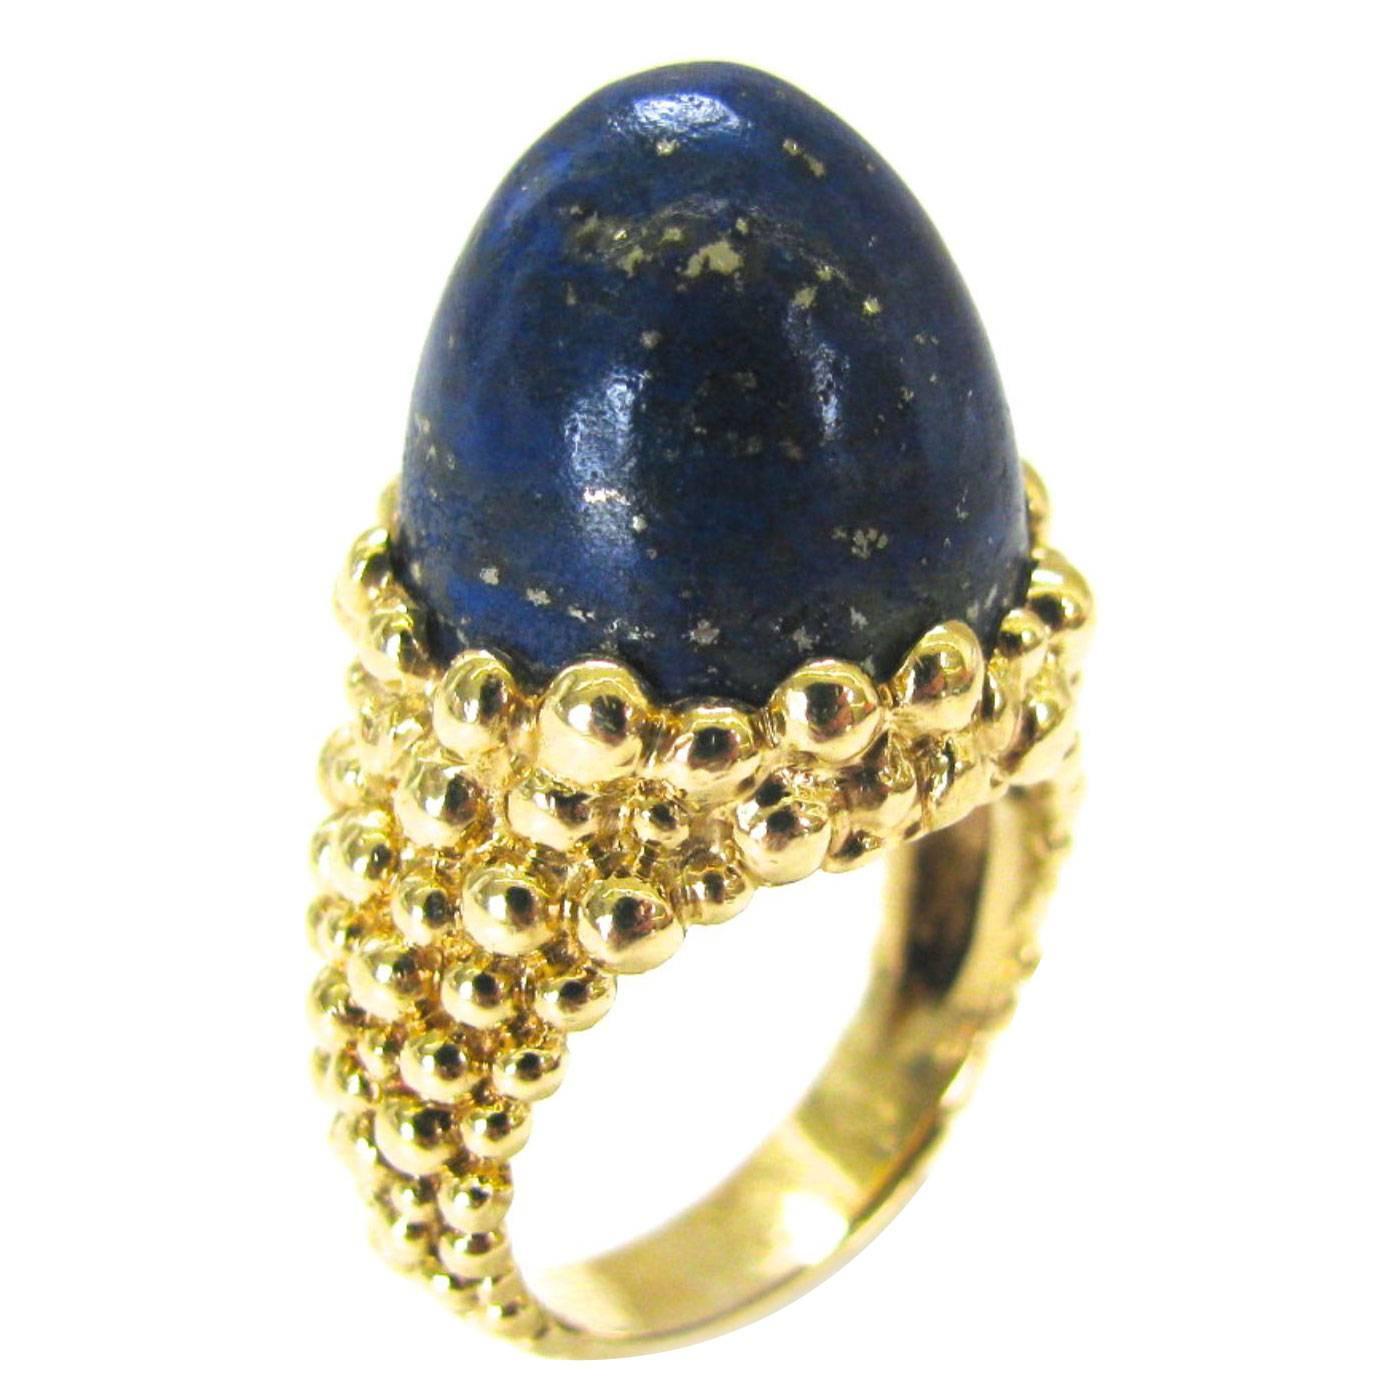 Kutchinsky Lapis Lazuli Dome Ring, 1970